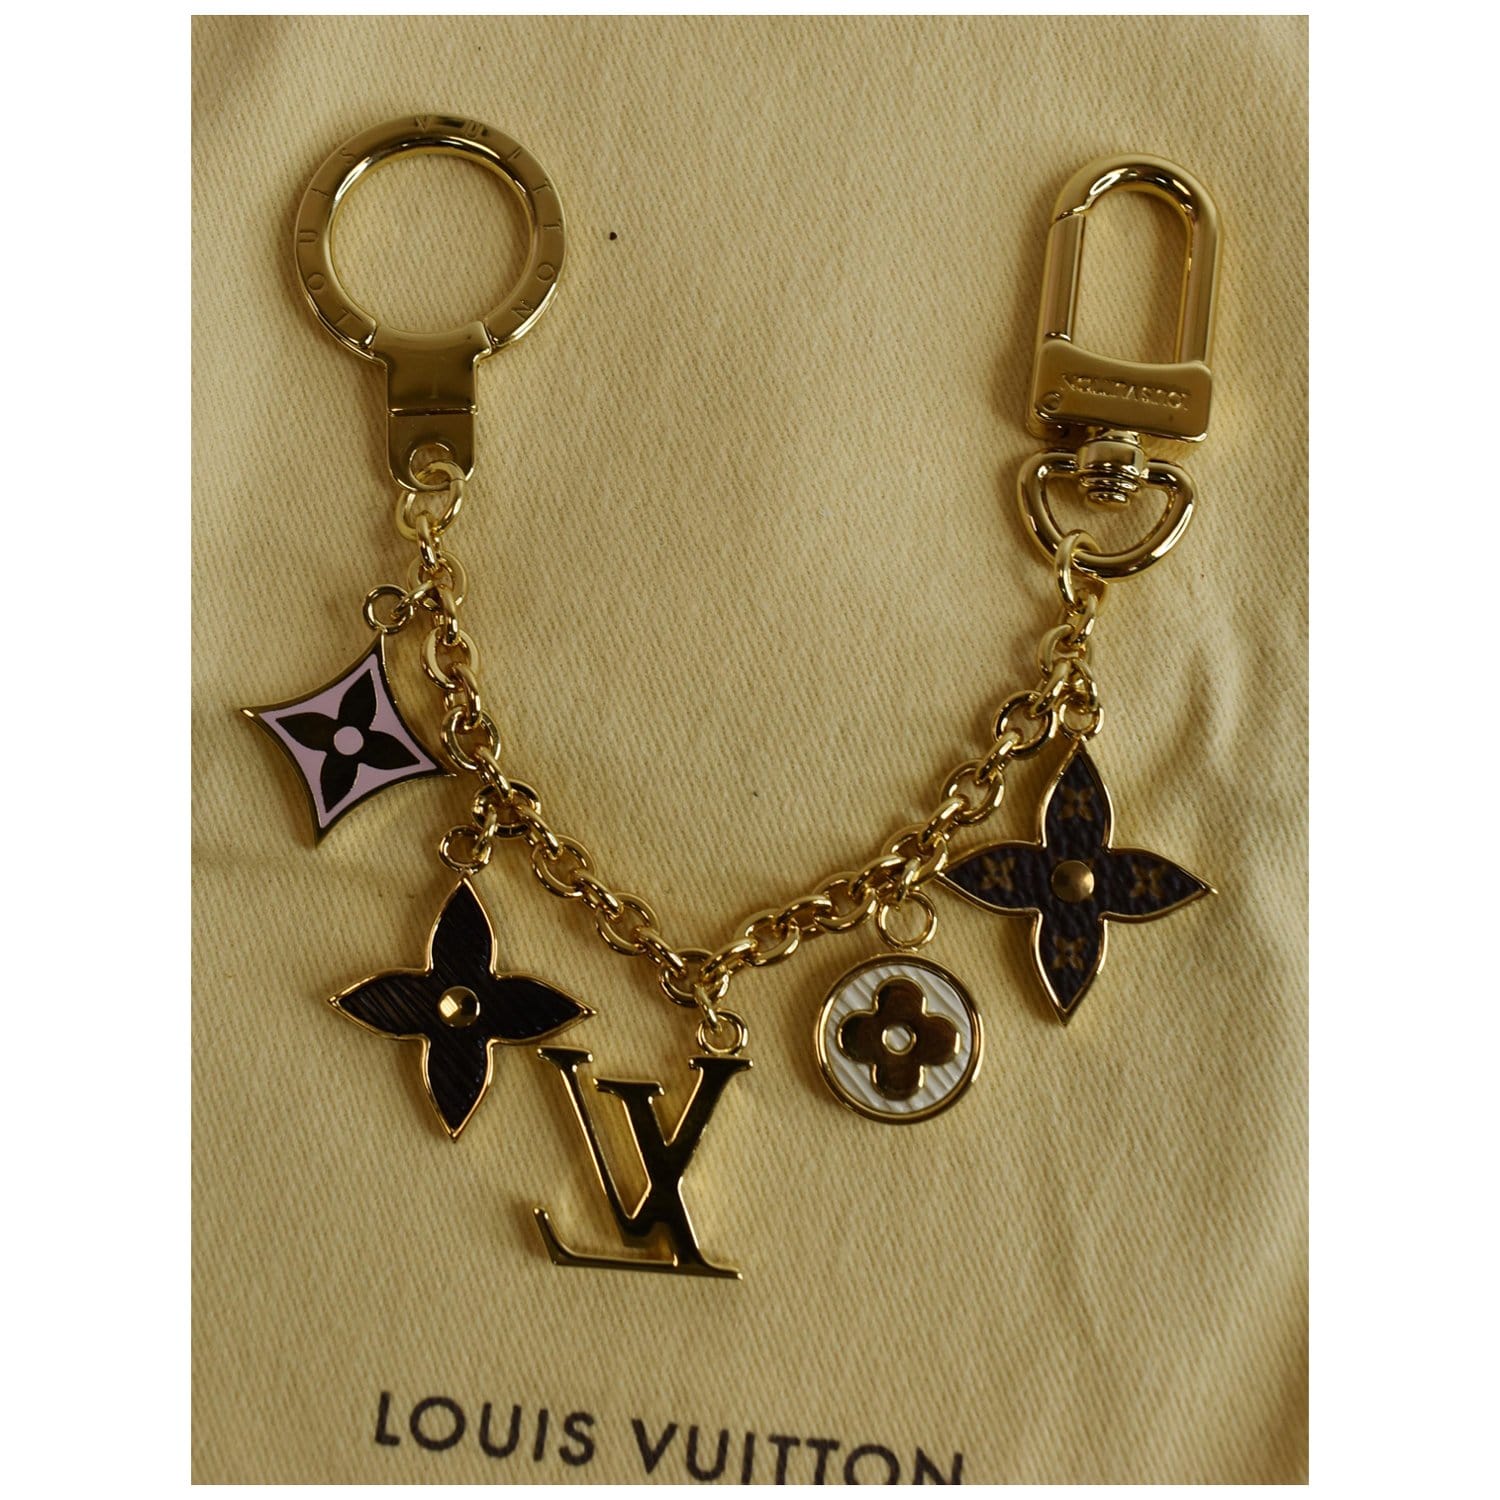 Louis-Vuitton-Bijoux-Sac-Chaine-Spring-Street-Bag-Charm-M68999